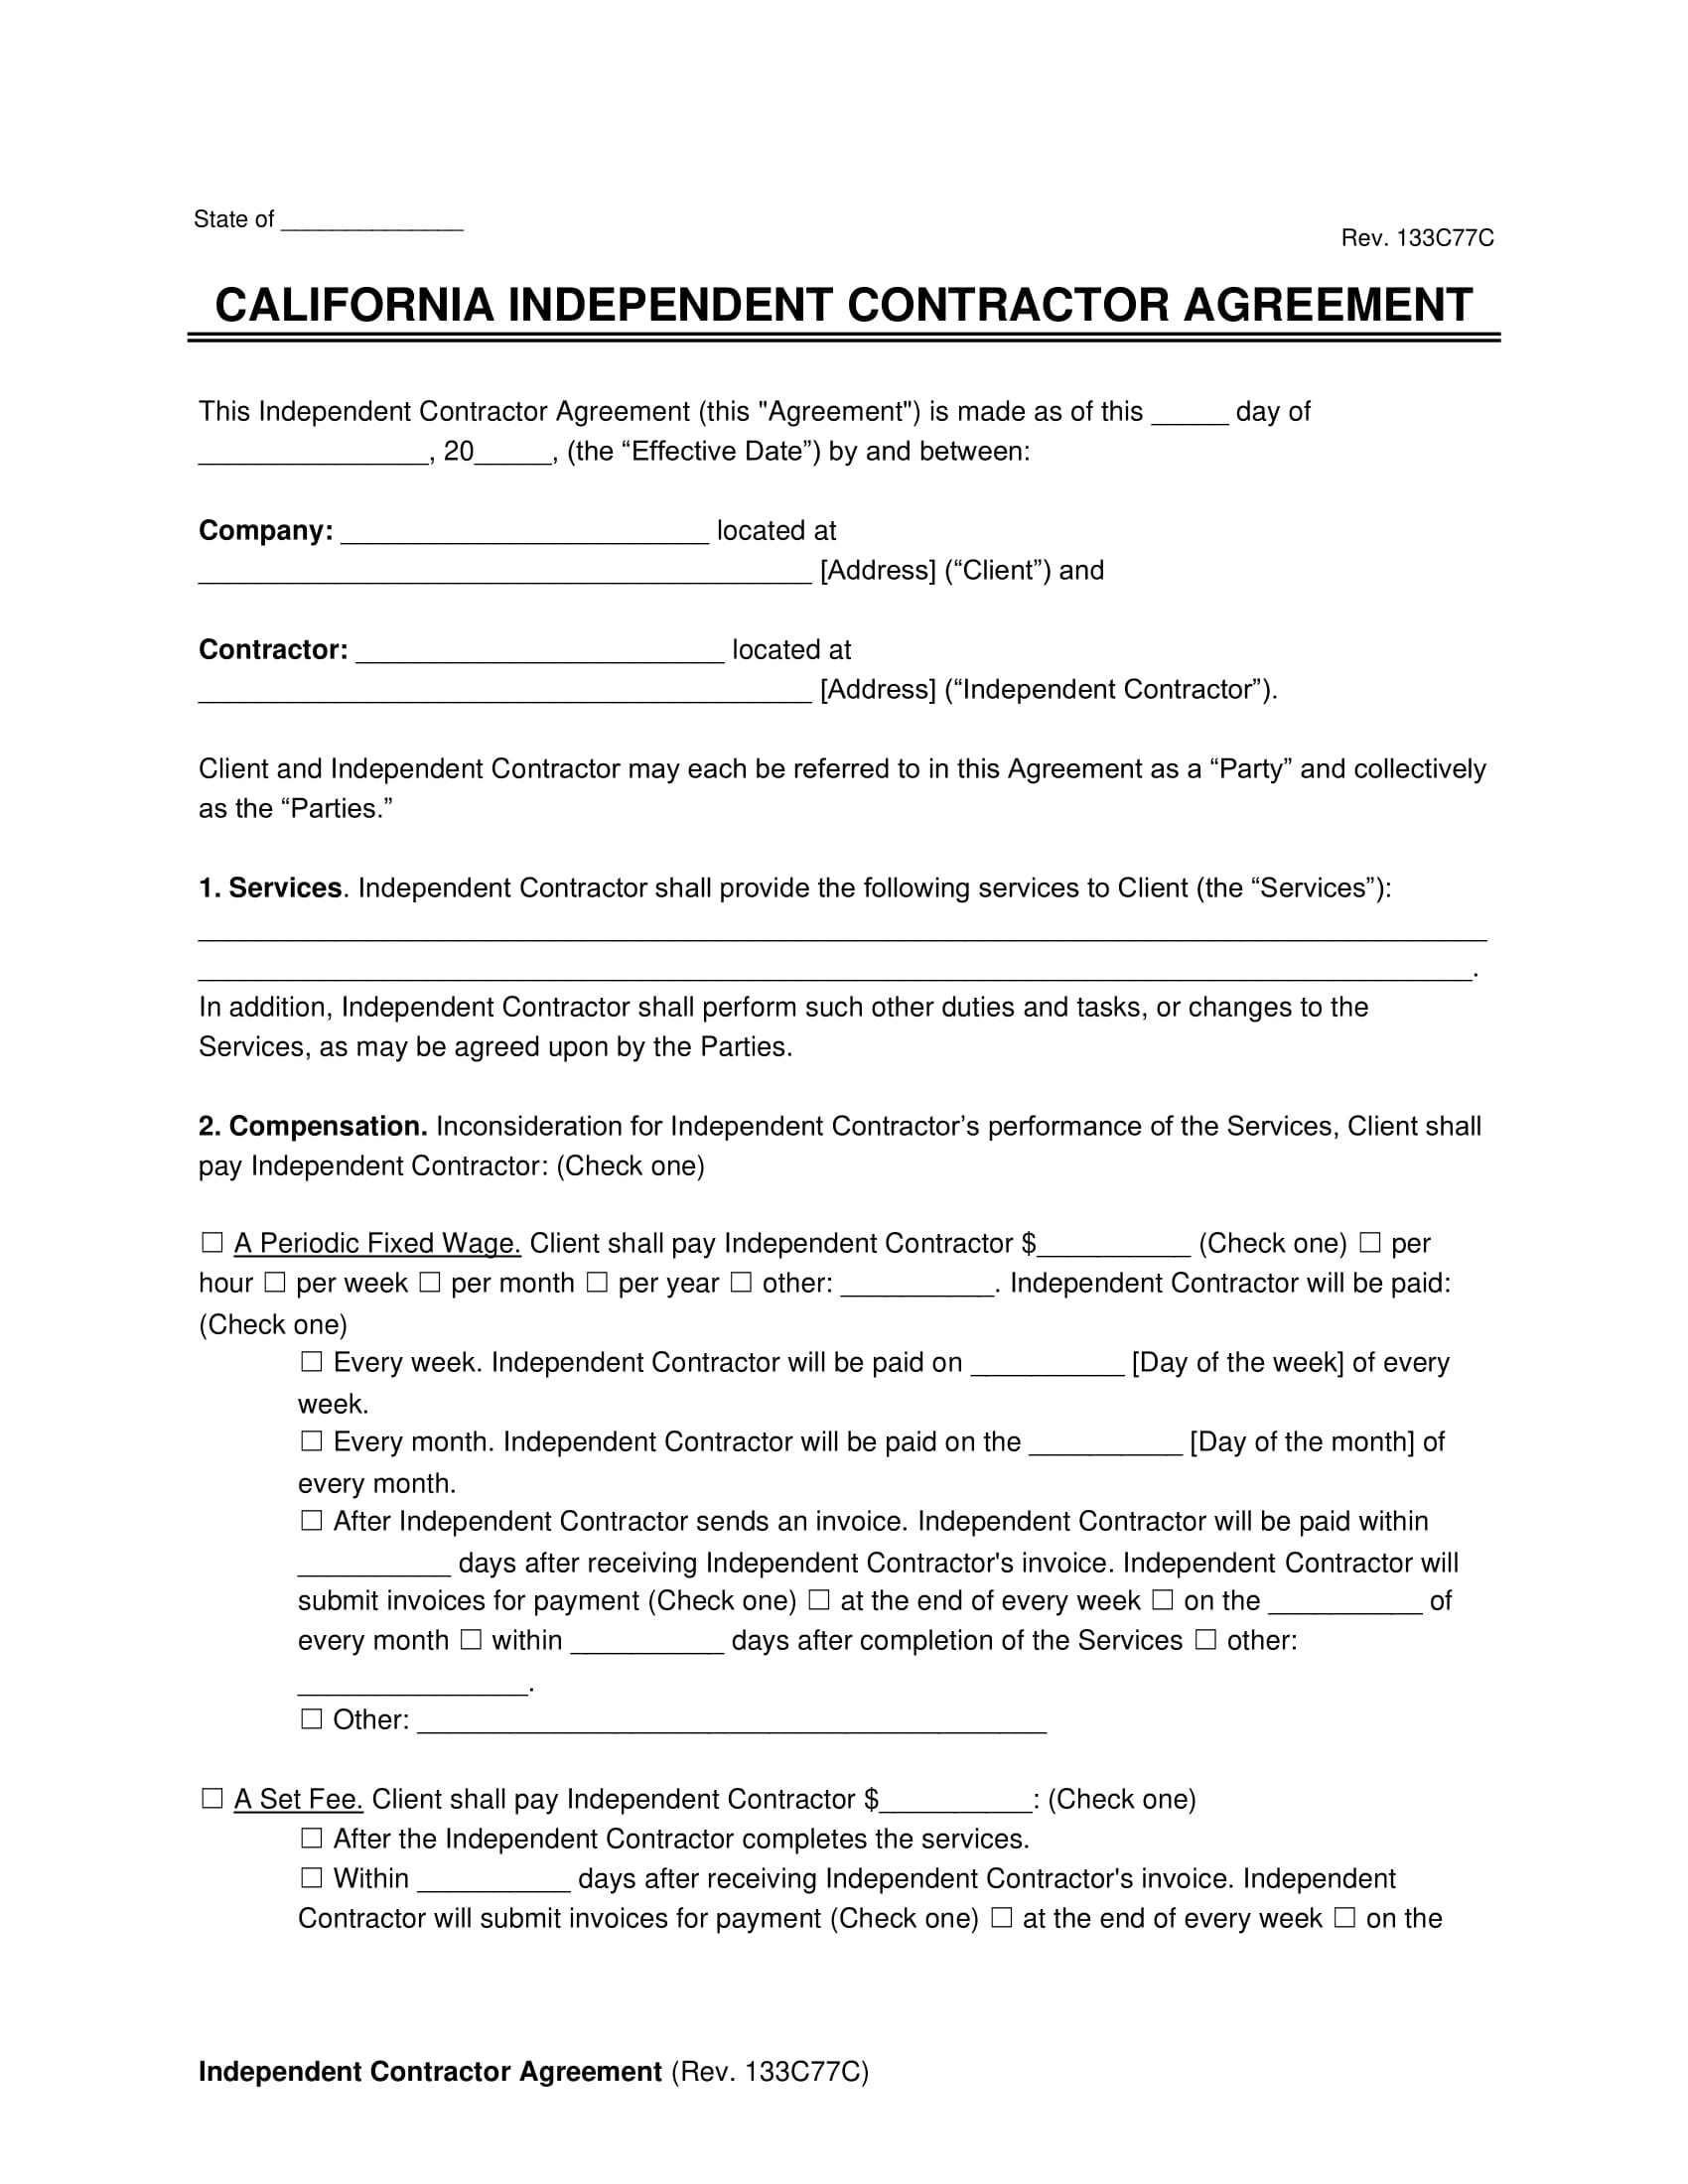 California Independent contractor agreement screenshot